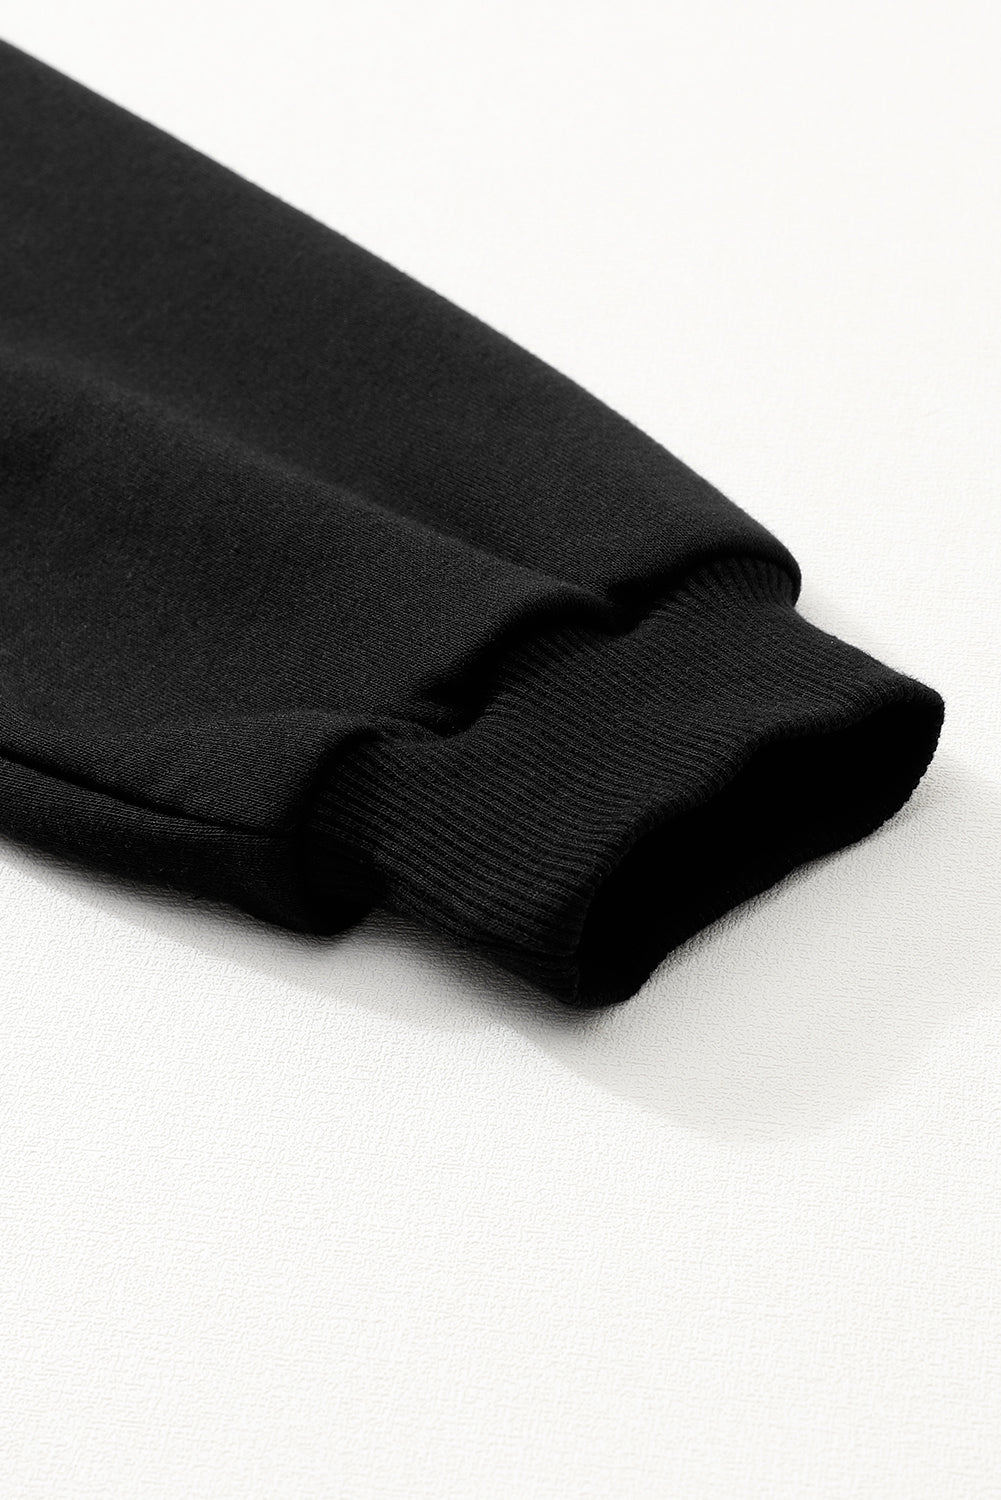 Black Solid Color Puff Sleeve Ruffle Hem Mini Dress